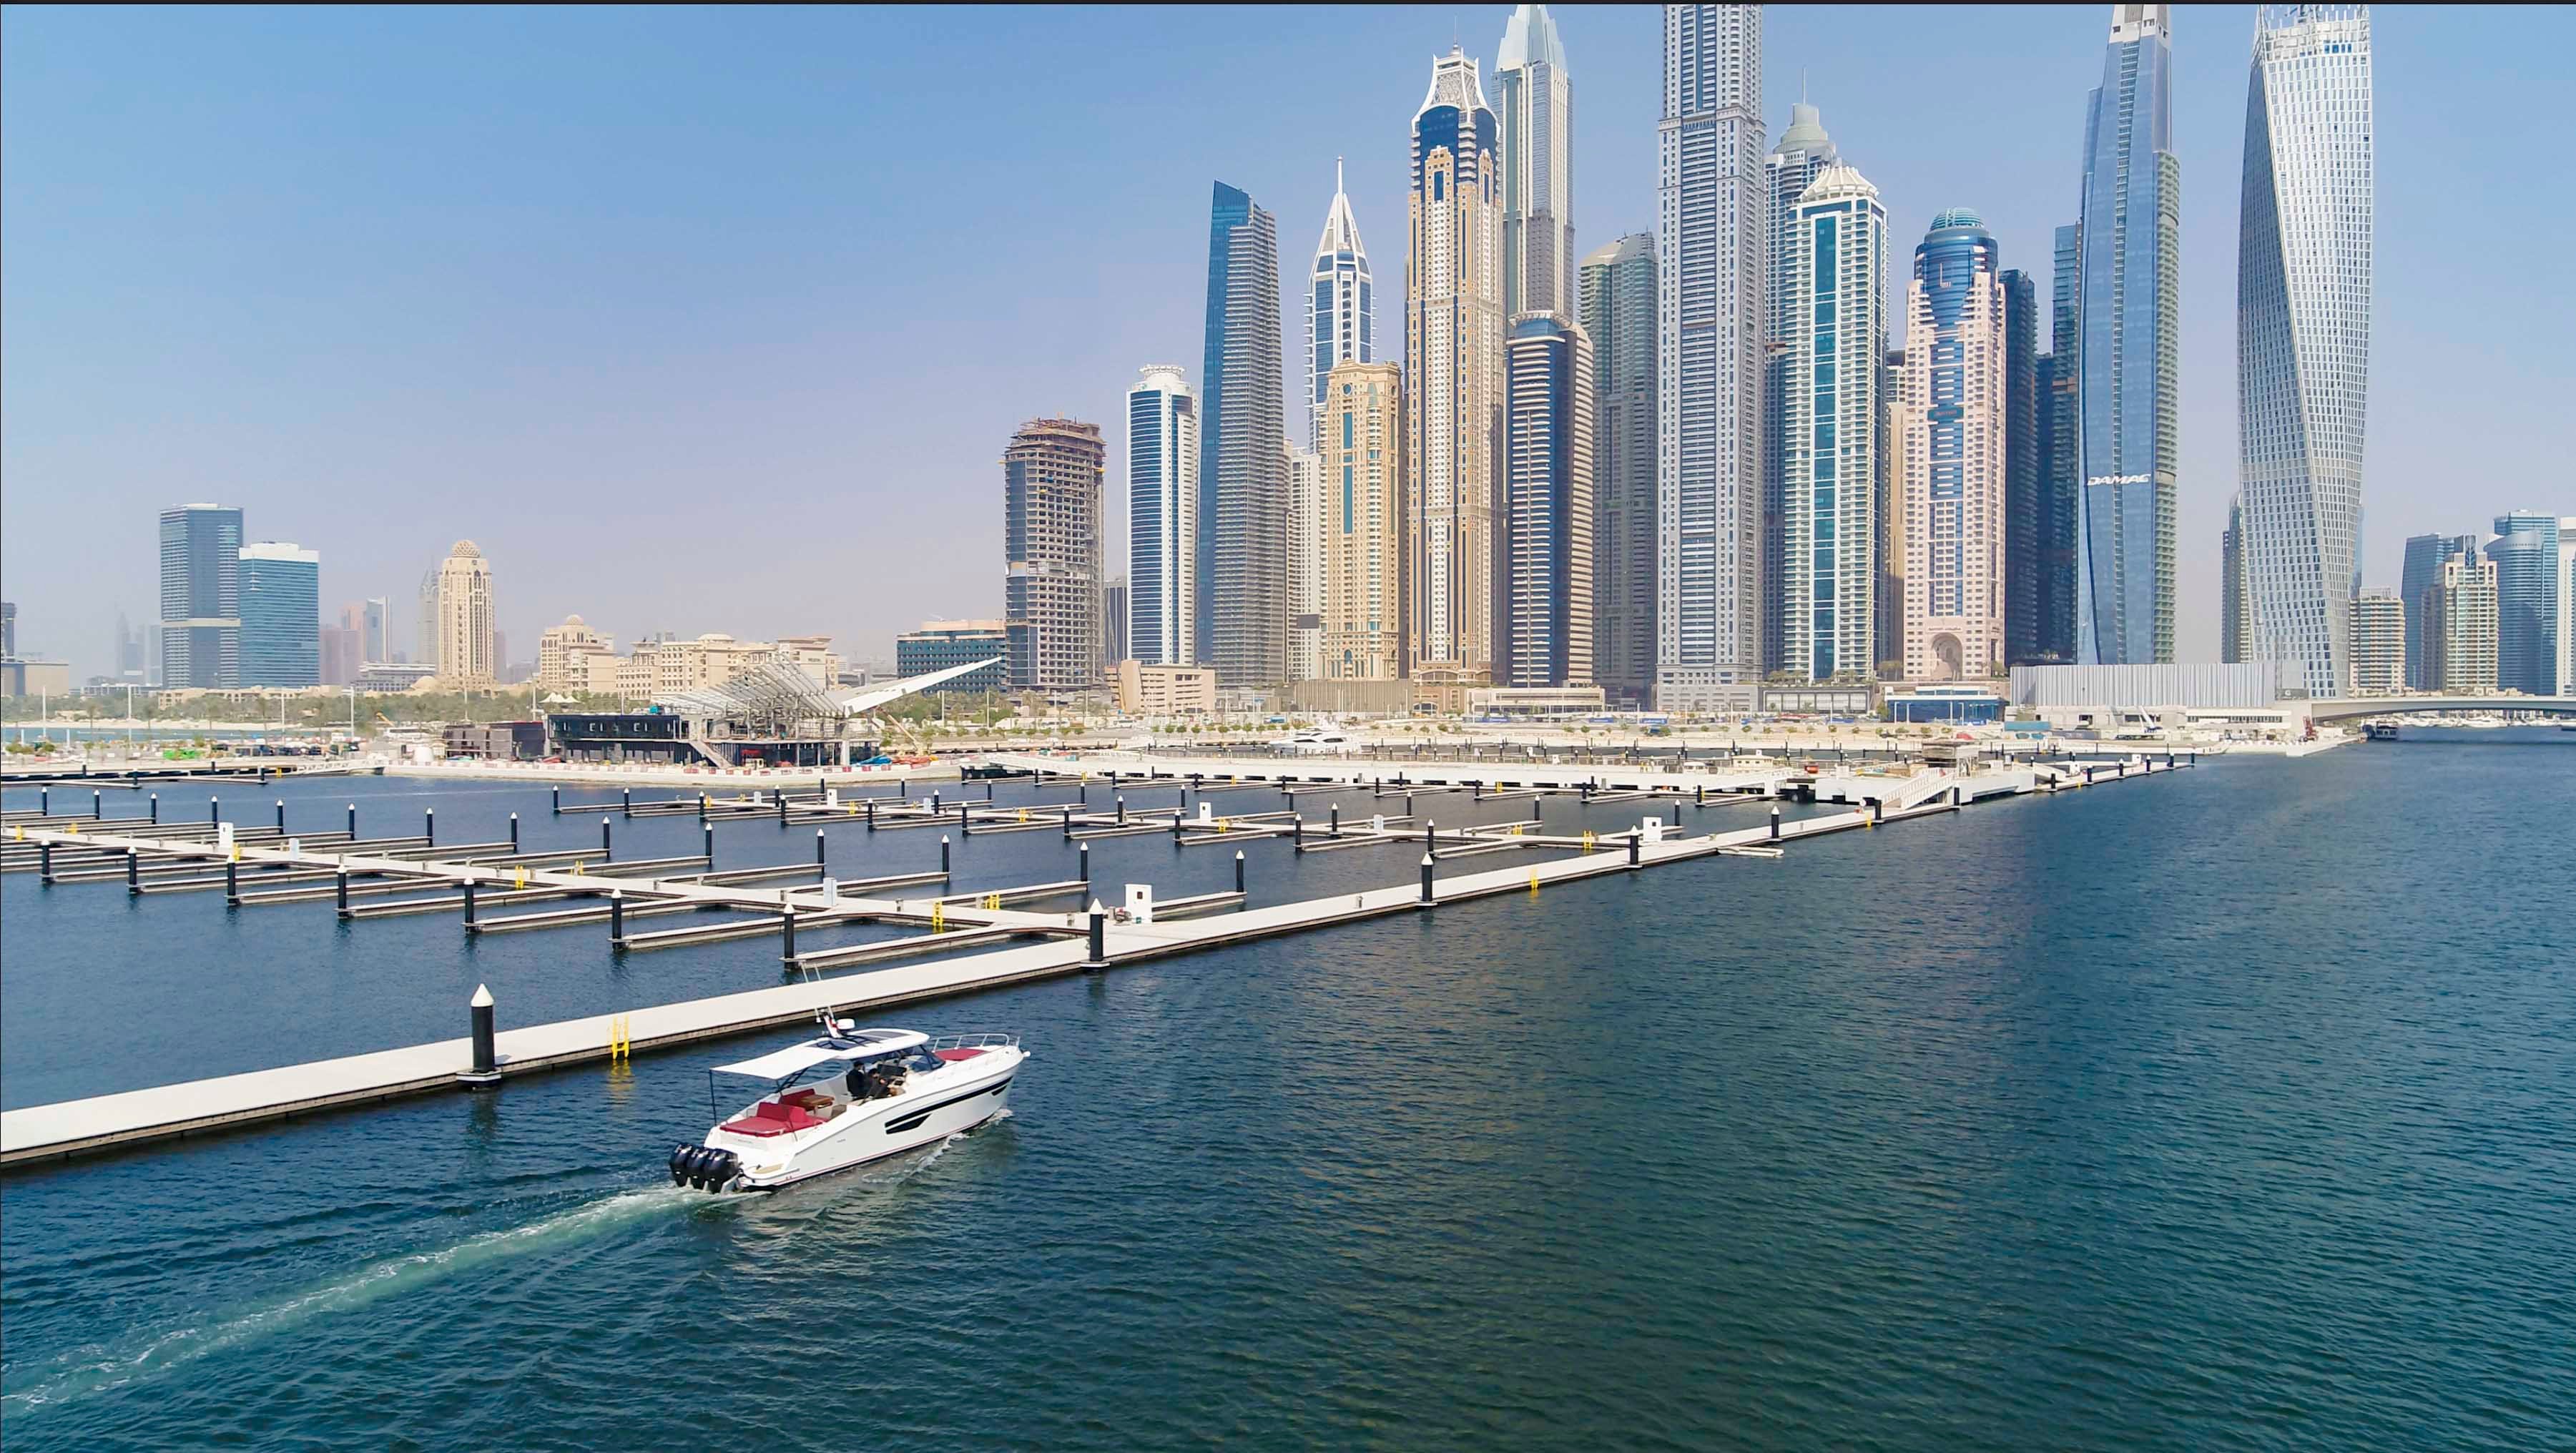 Oryx 379 Entering Dubai Marina Channel to berth in Dubai Harbour Marina (1)